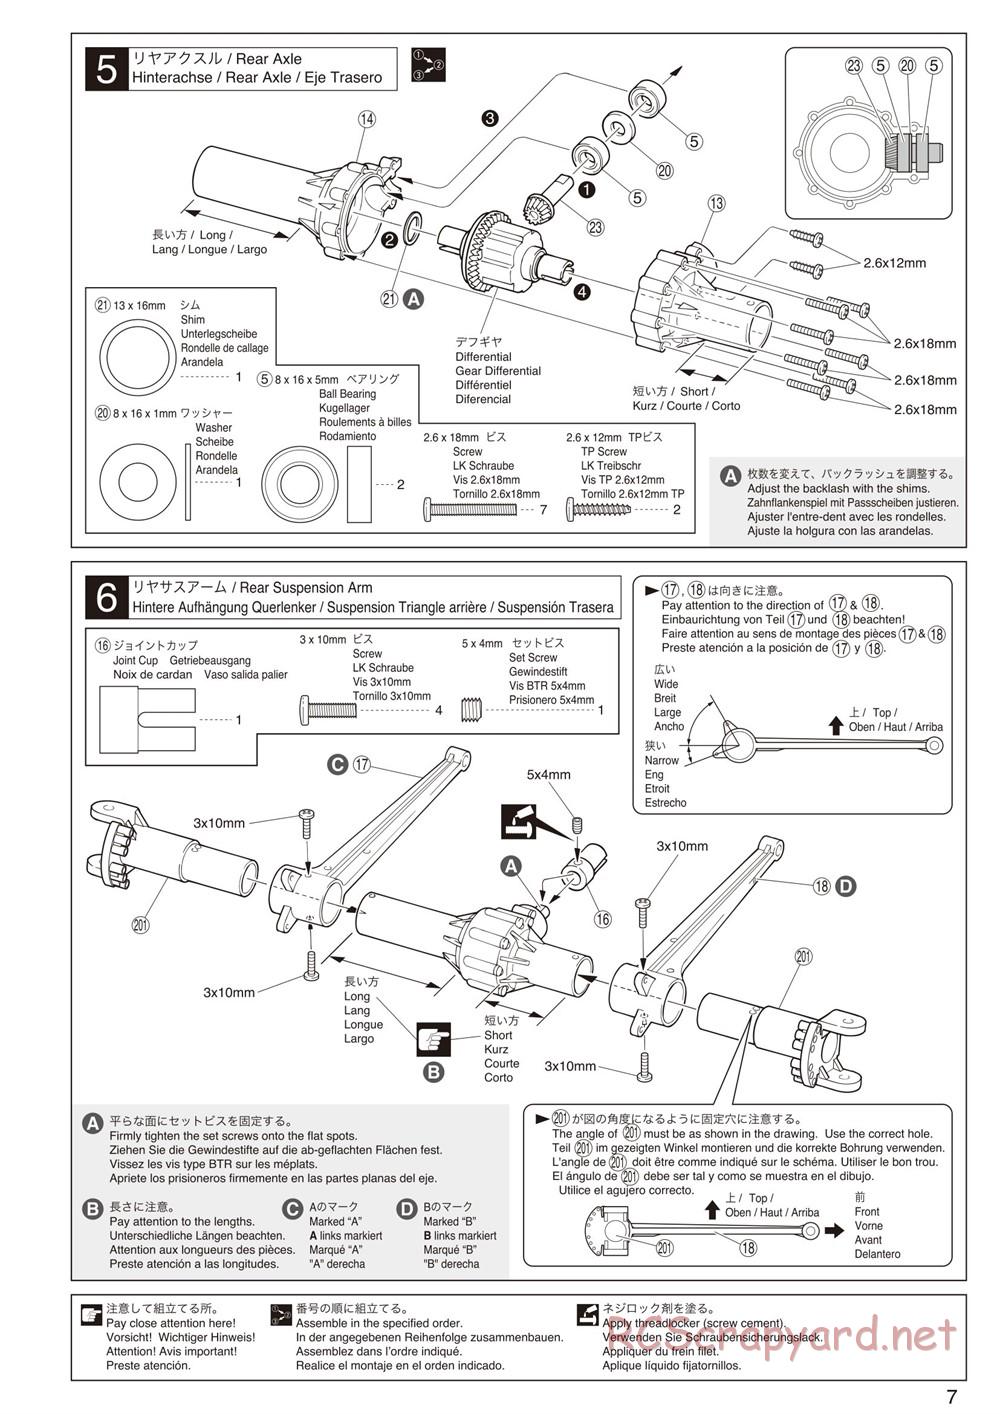 Kyosho - Mad Force Kruiser 2.0 VE - Manual - Page 7